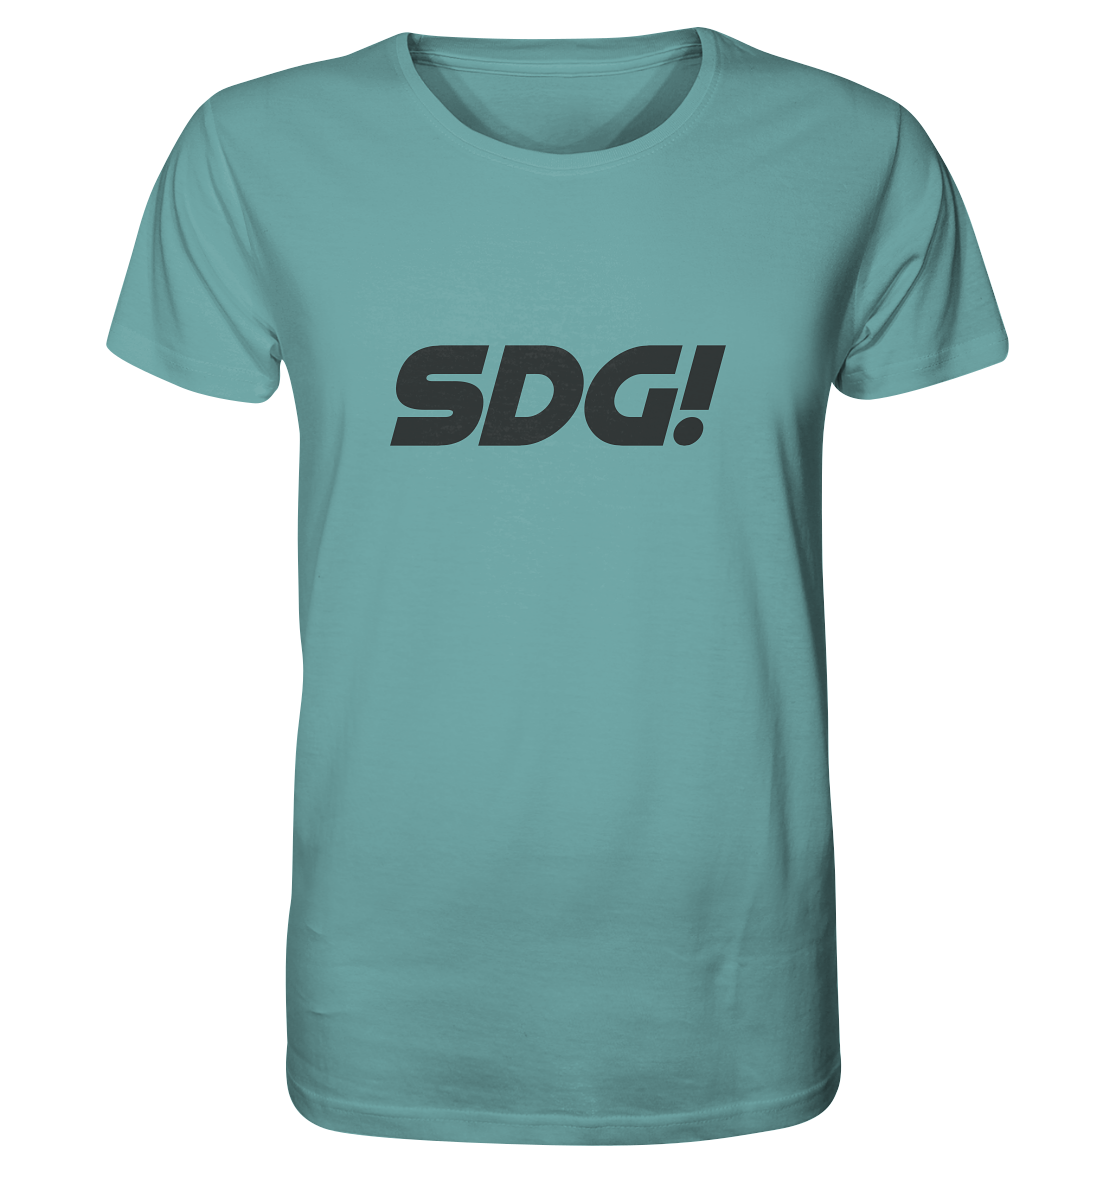 SDG!  - Organic Shirt